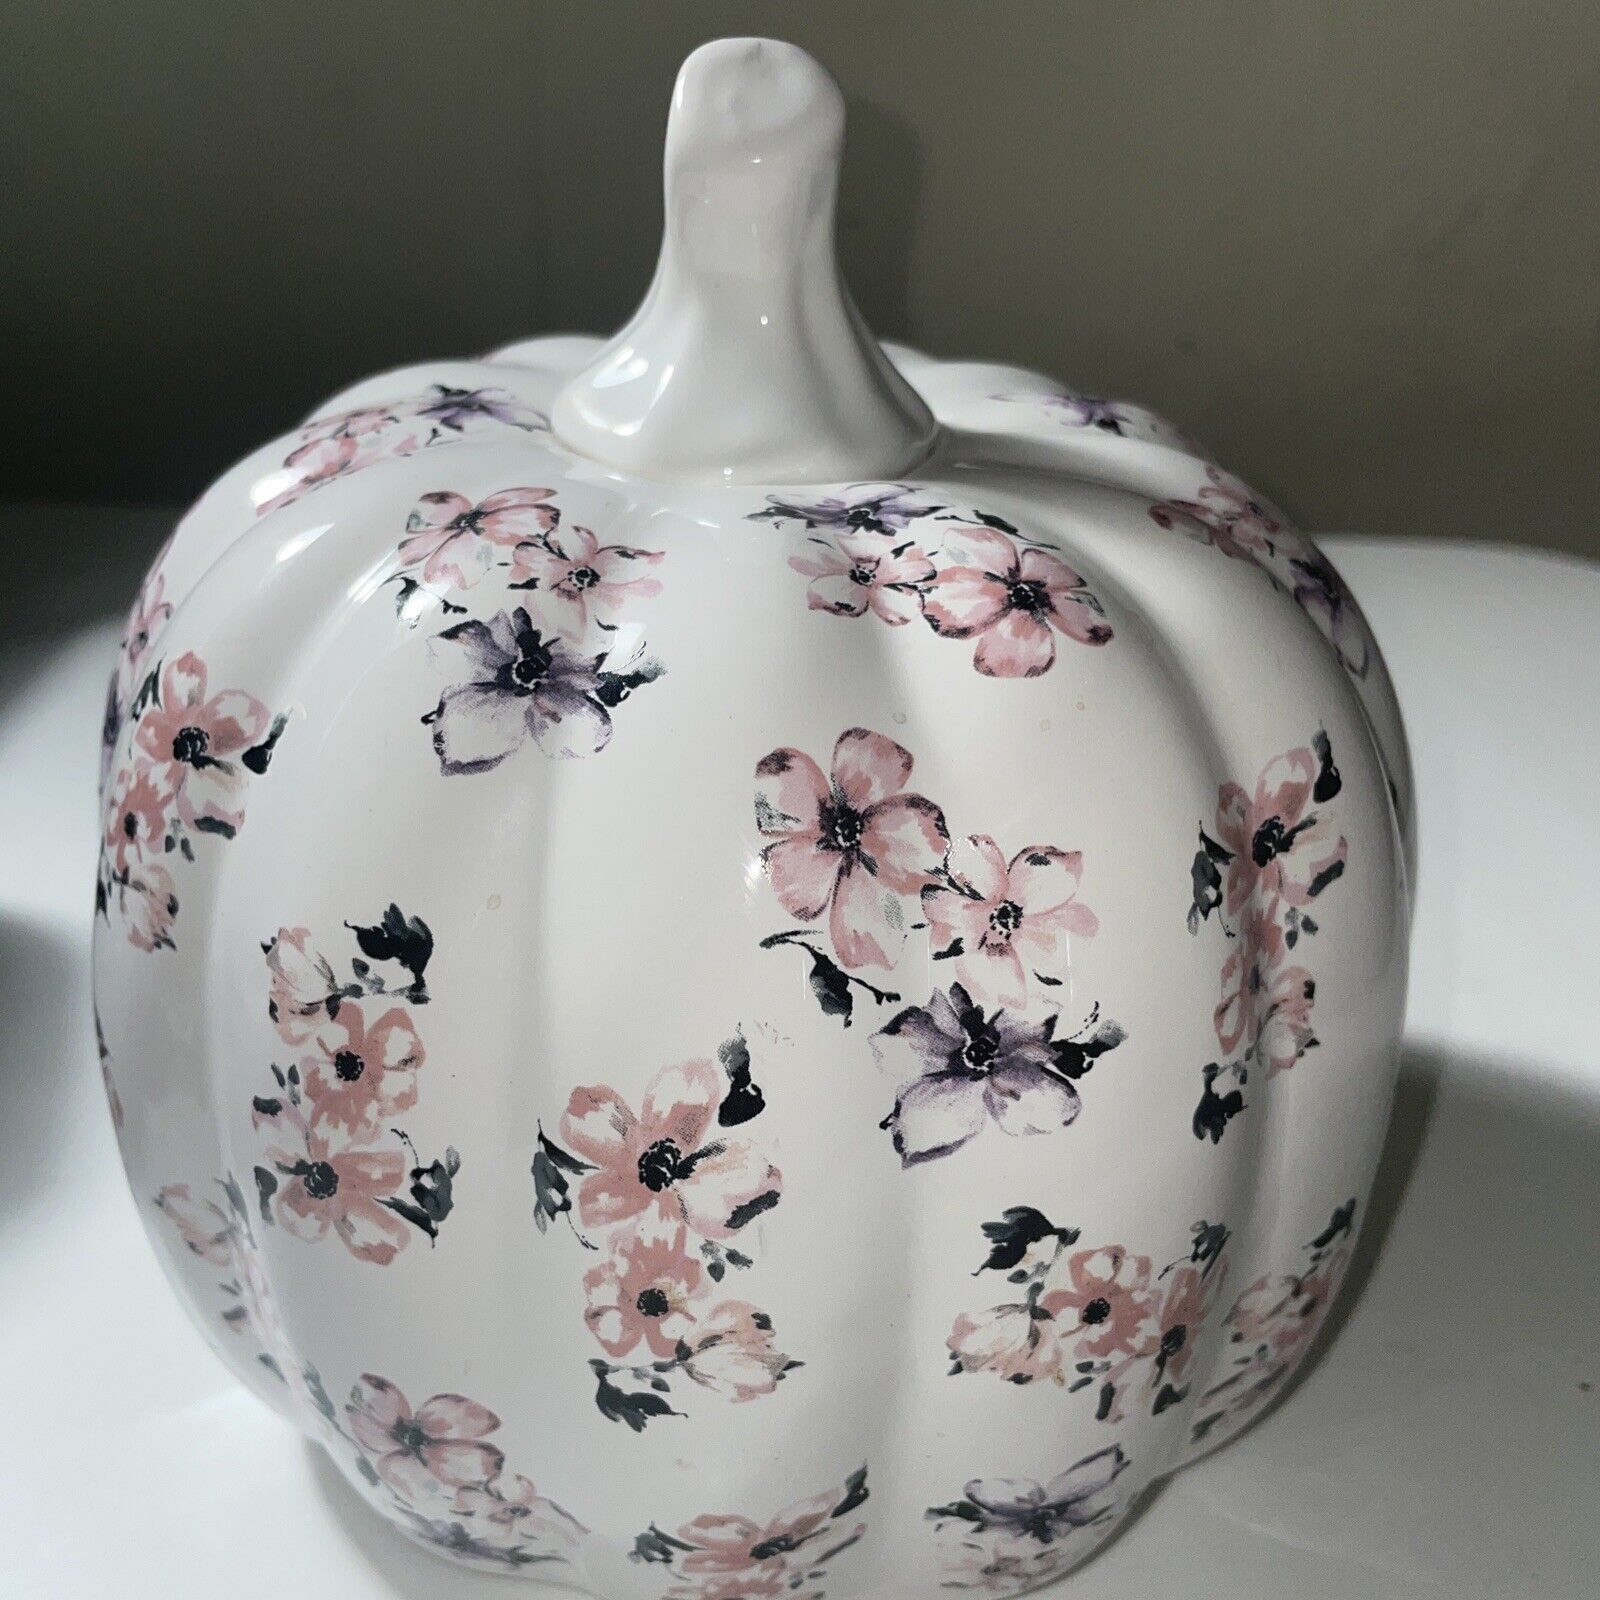 Dept. 56 Hand Painted Ceramic Floral Pumpkin White Blue Pink 8”